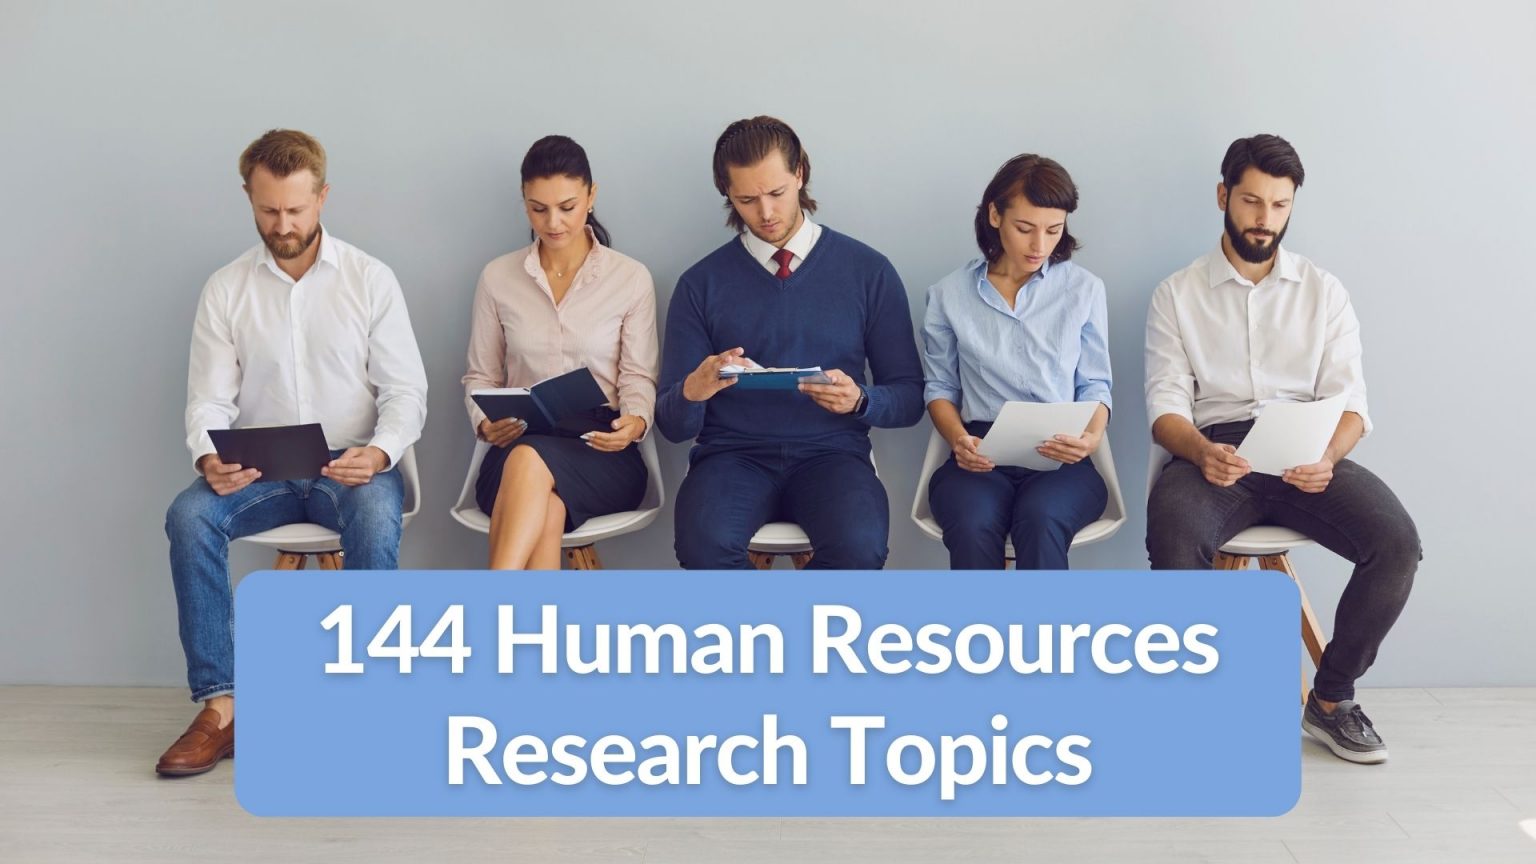 good human resource research topics